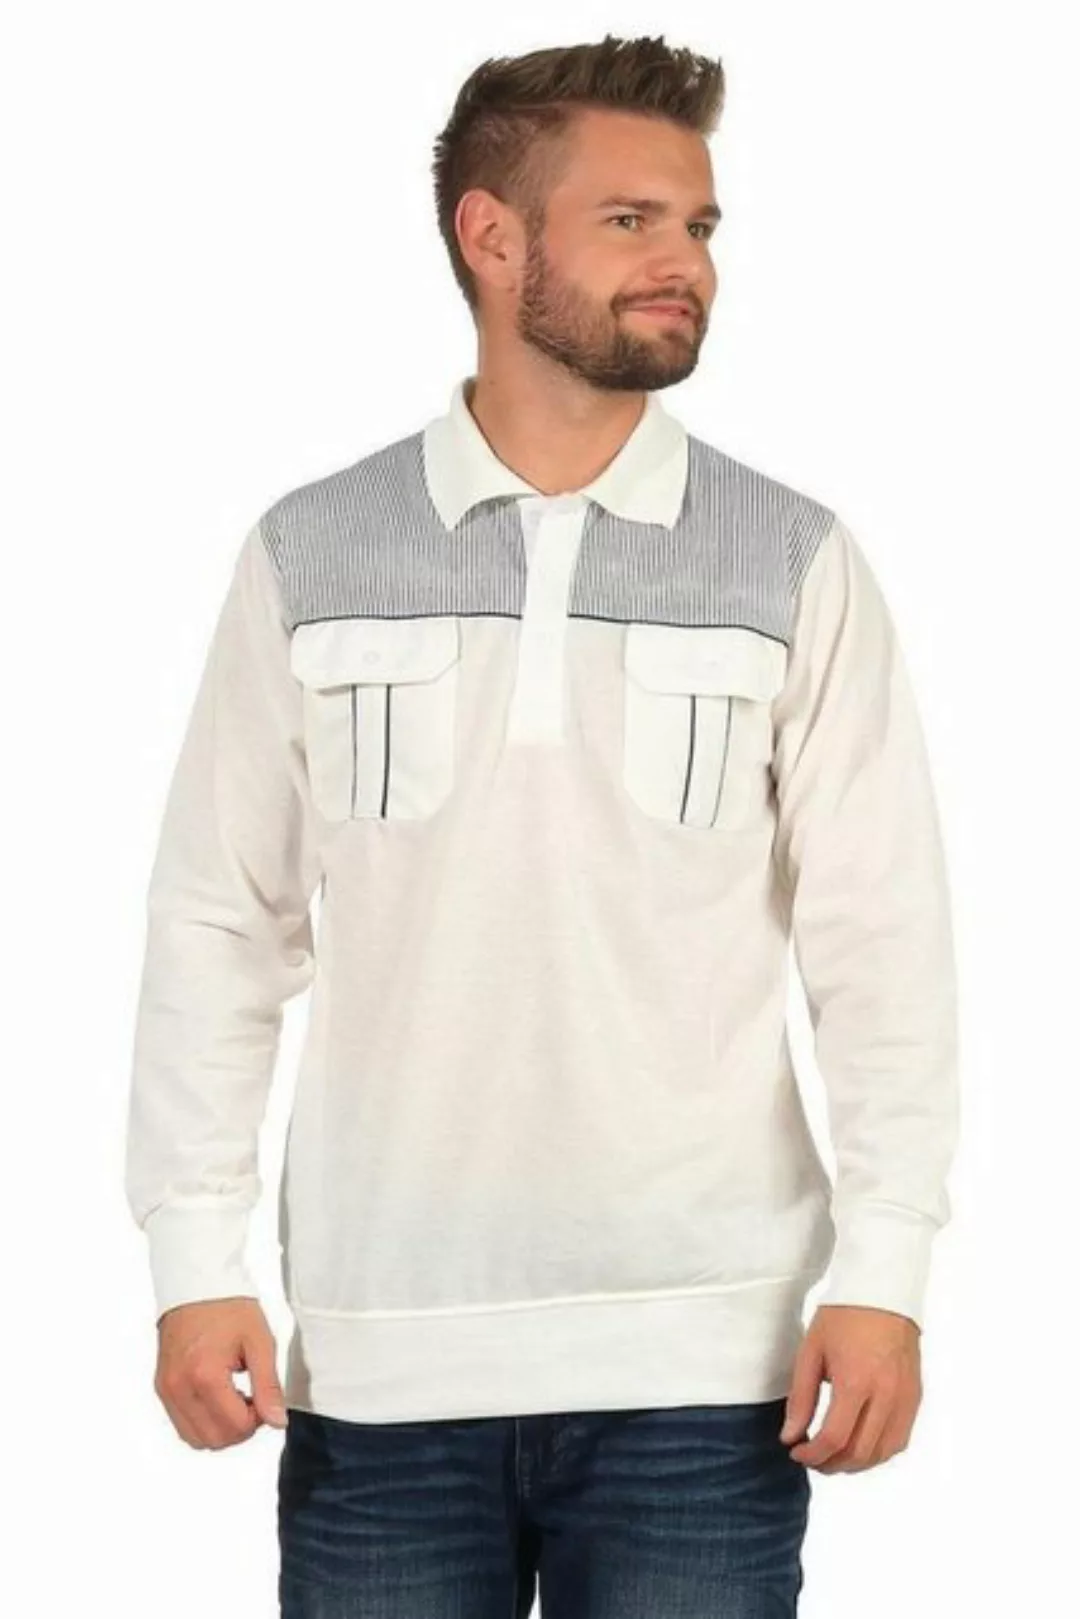 EloModa Poloshirt Herren Polo Shirt Langarm Baumwolle Longsleeve mit Brustt günstig online kaufen